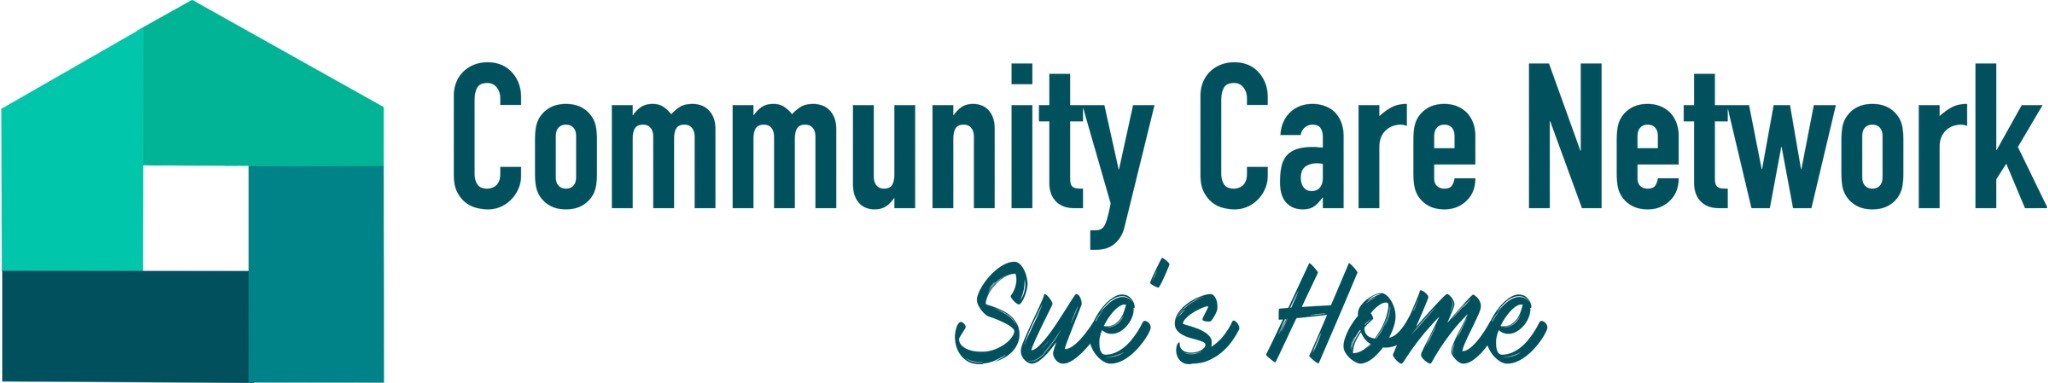 community care network logo